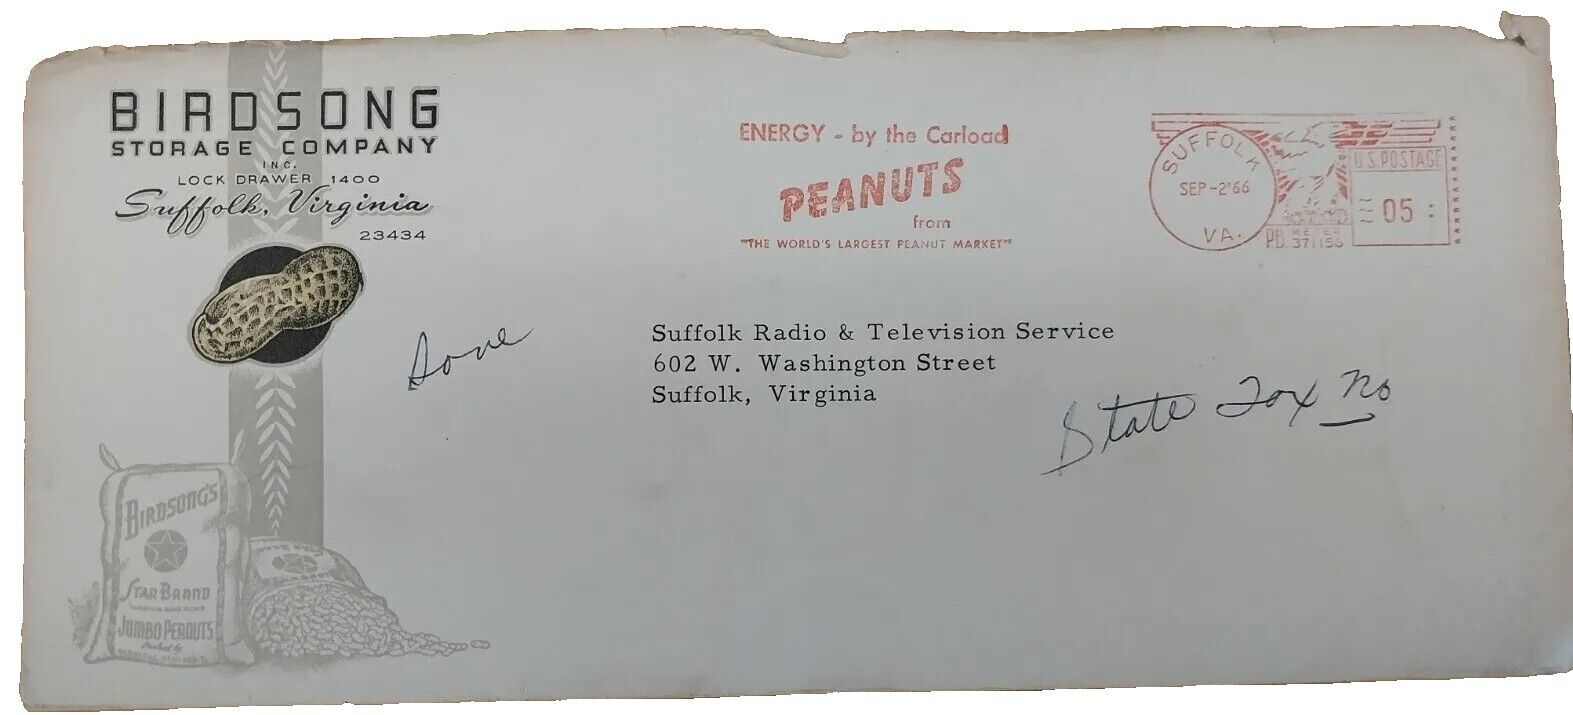 Birdsong Storage Company (Birdsong Peanuts) 1966 Envelope With Logo